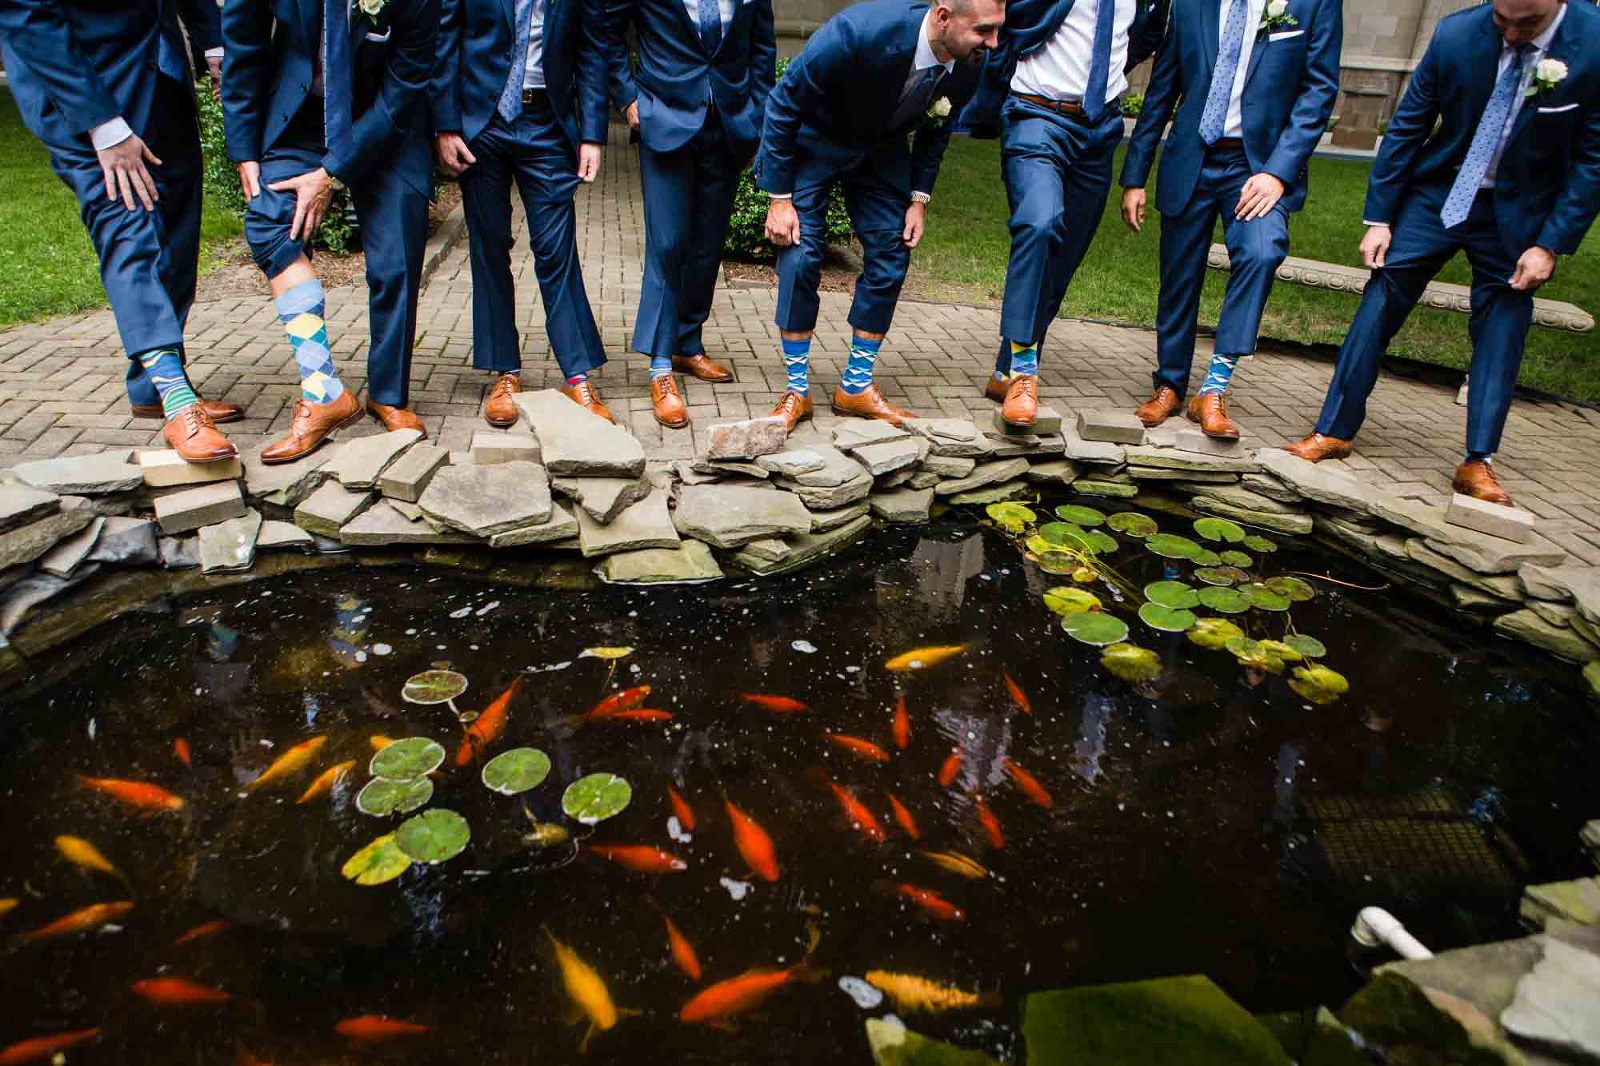 groomsmen show off their fun socks, in front of a pool full of orange fish.